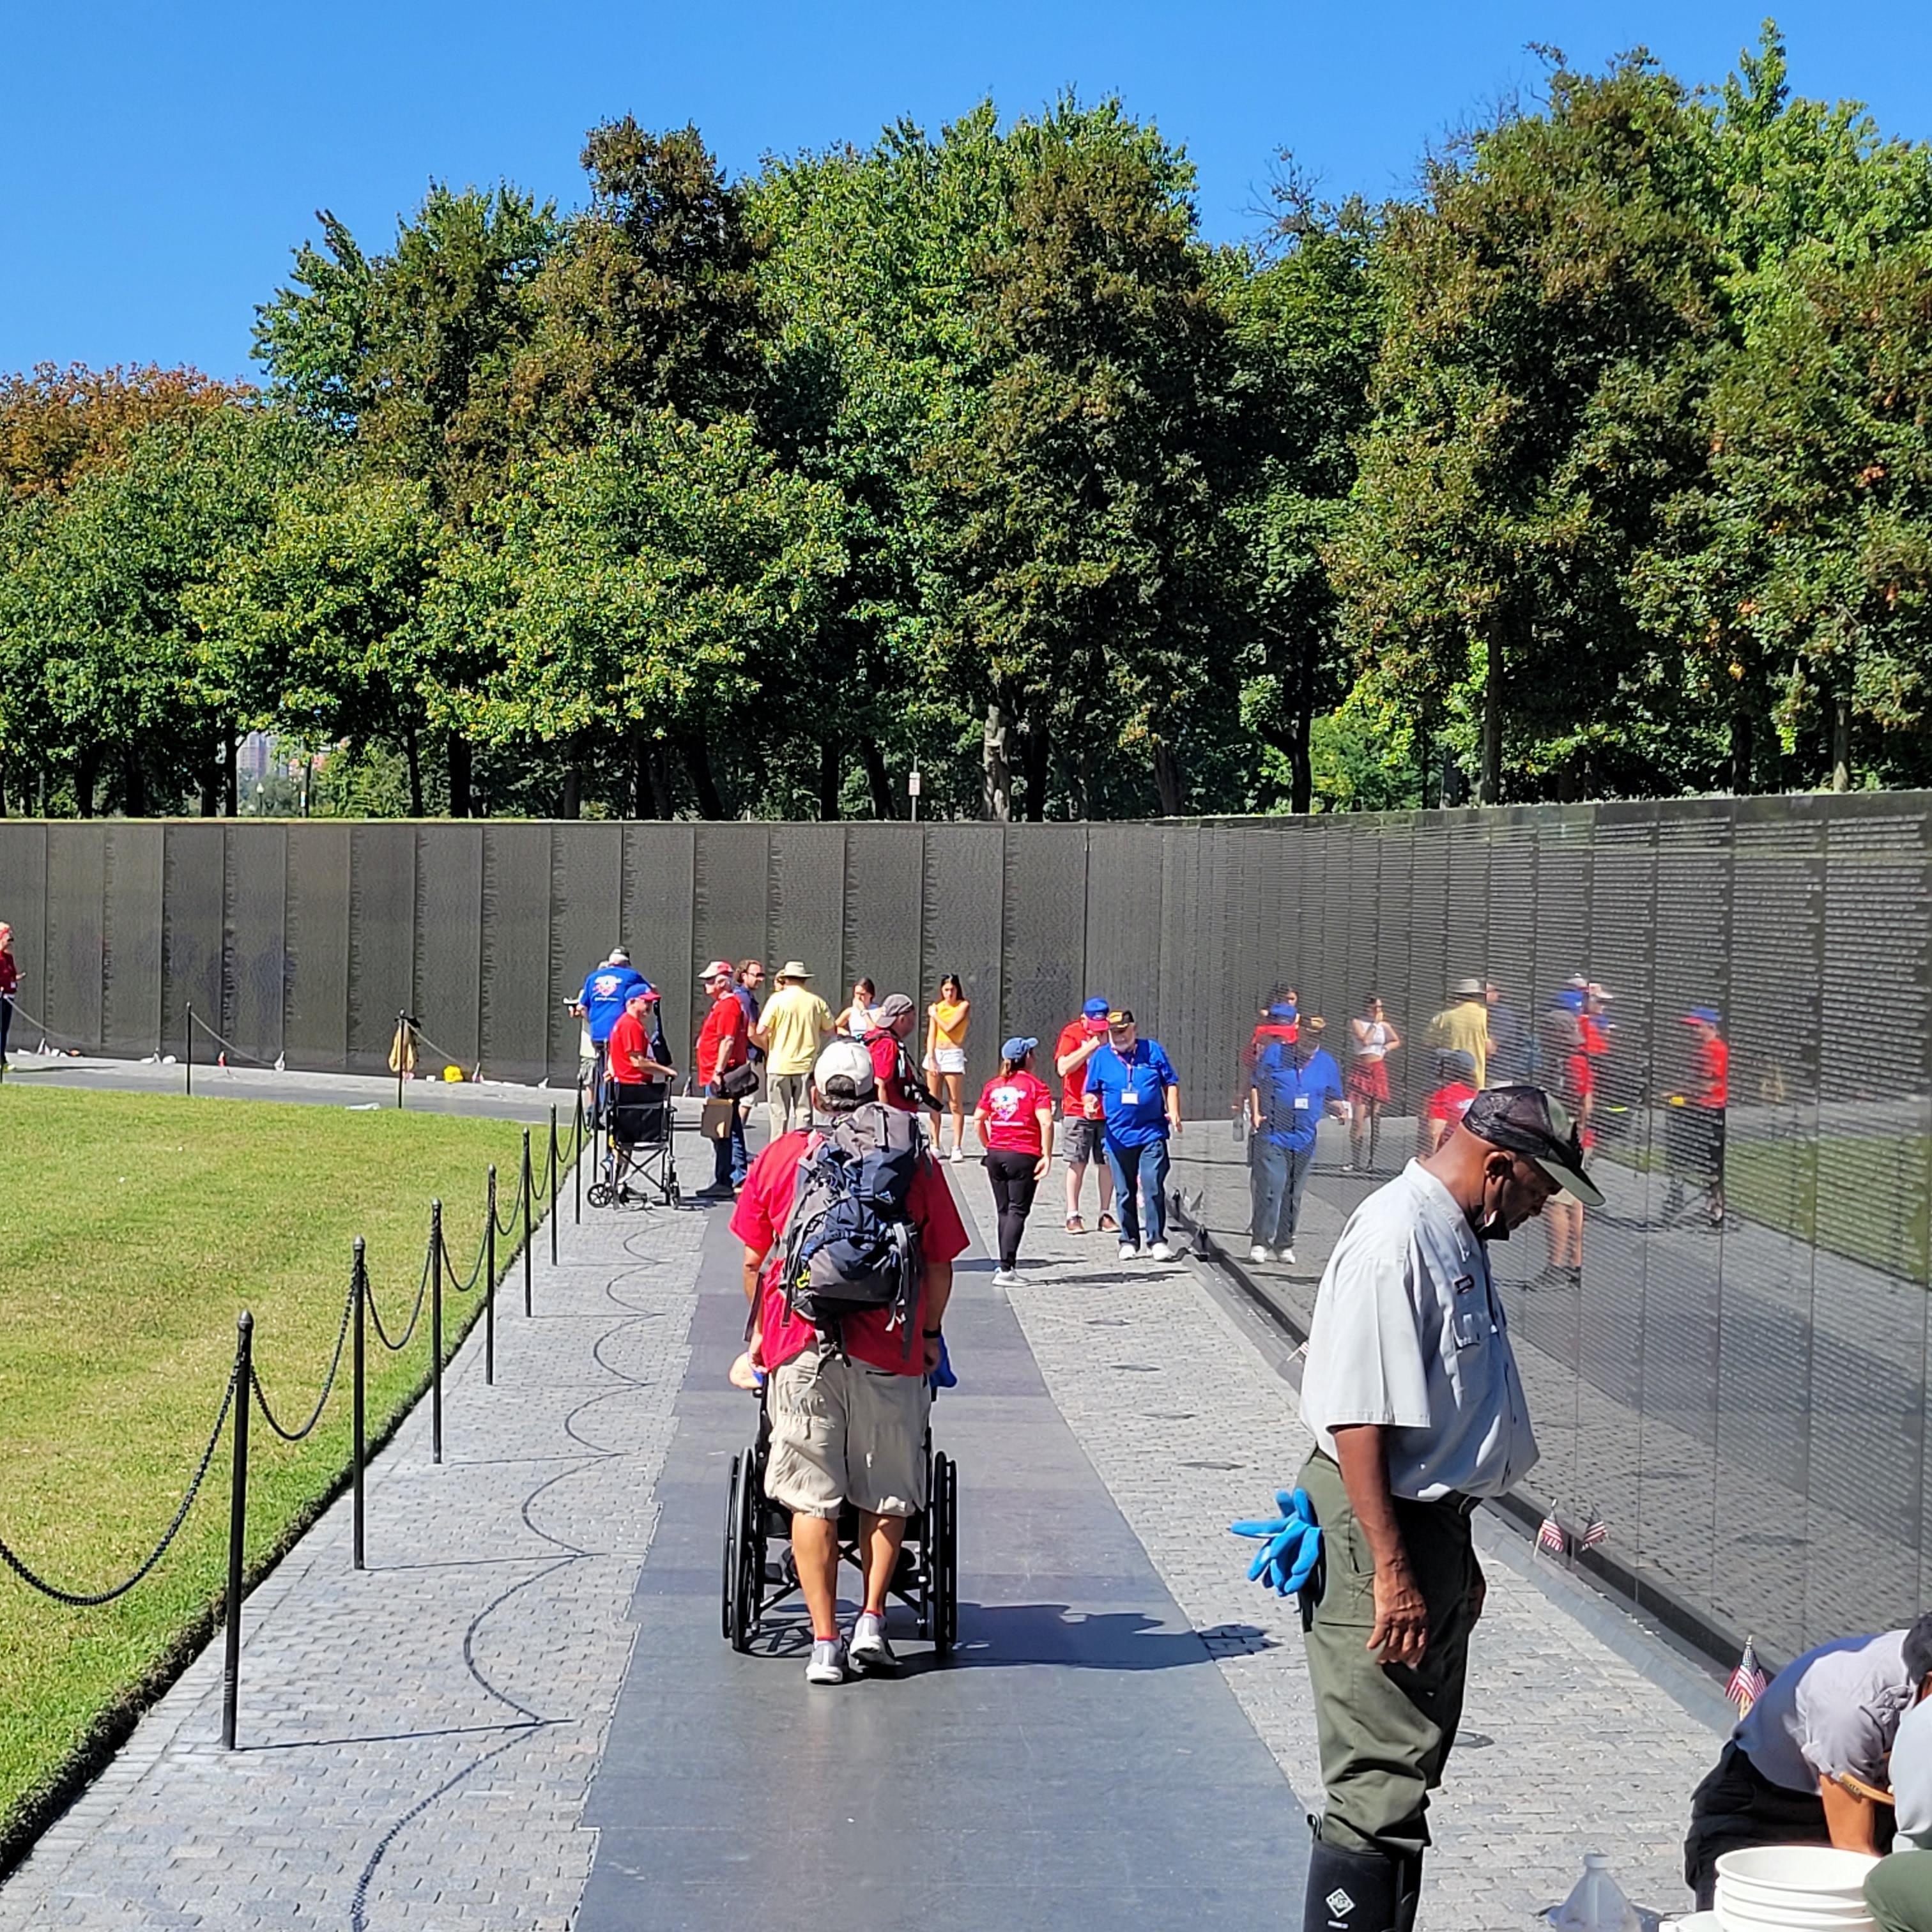 Vietnam Veteran Memorial - The Wall